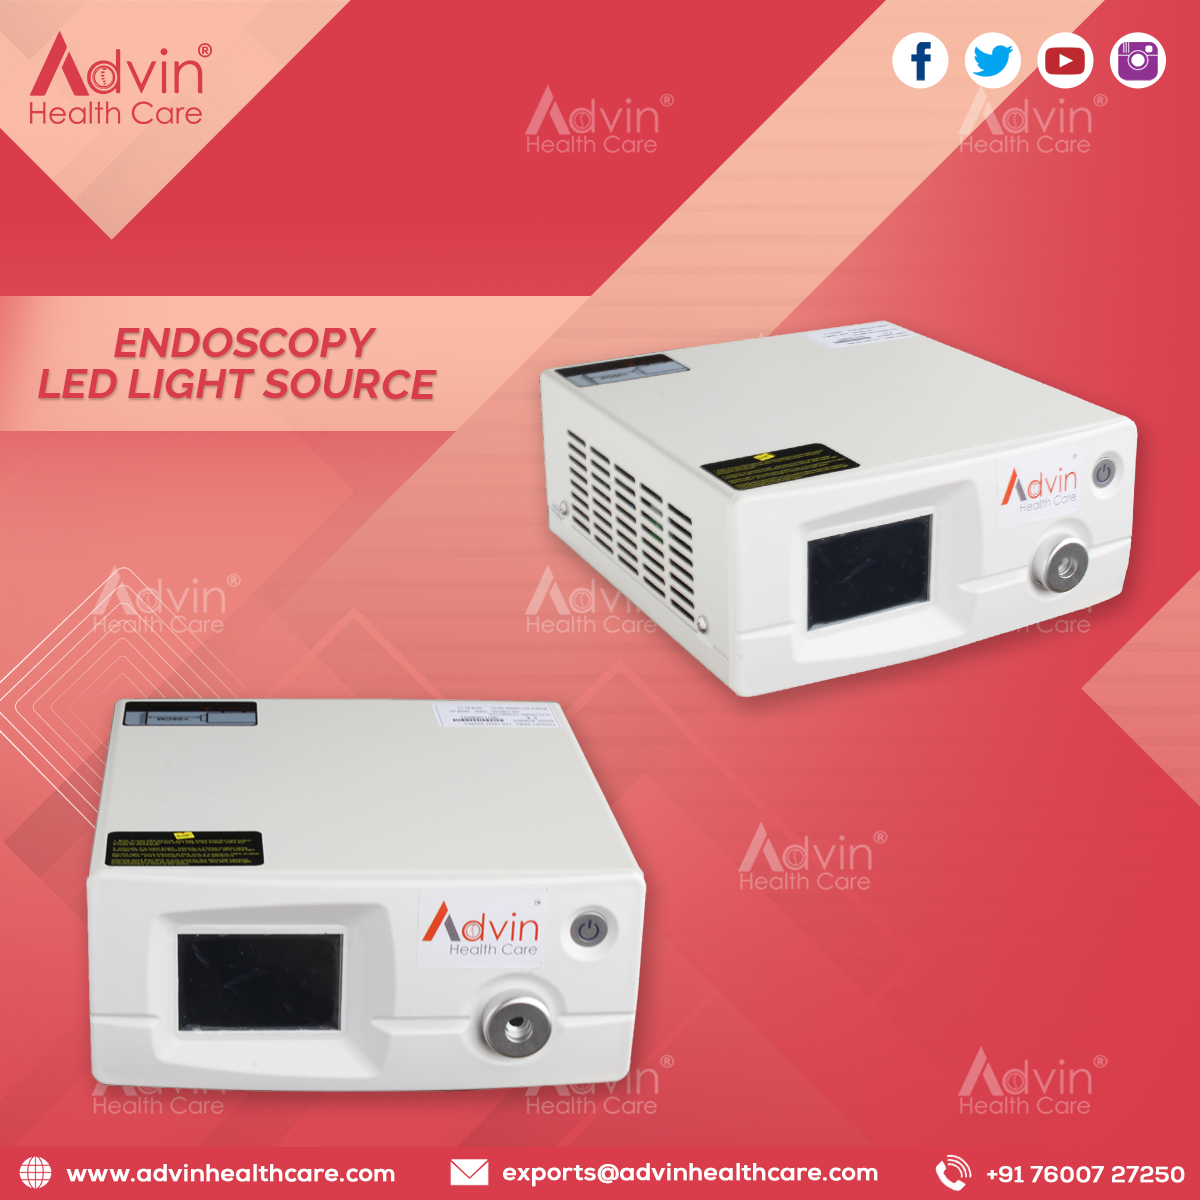 Advin Endoscopy LED Light Source